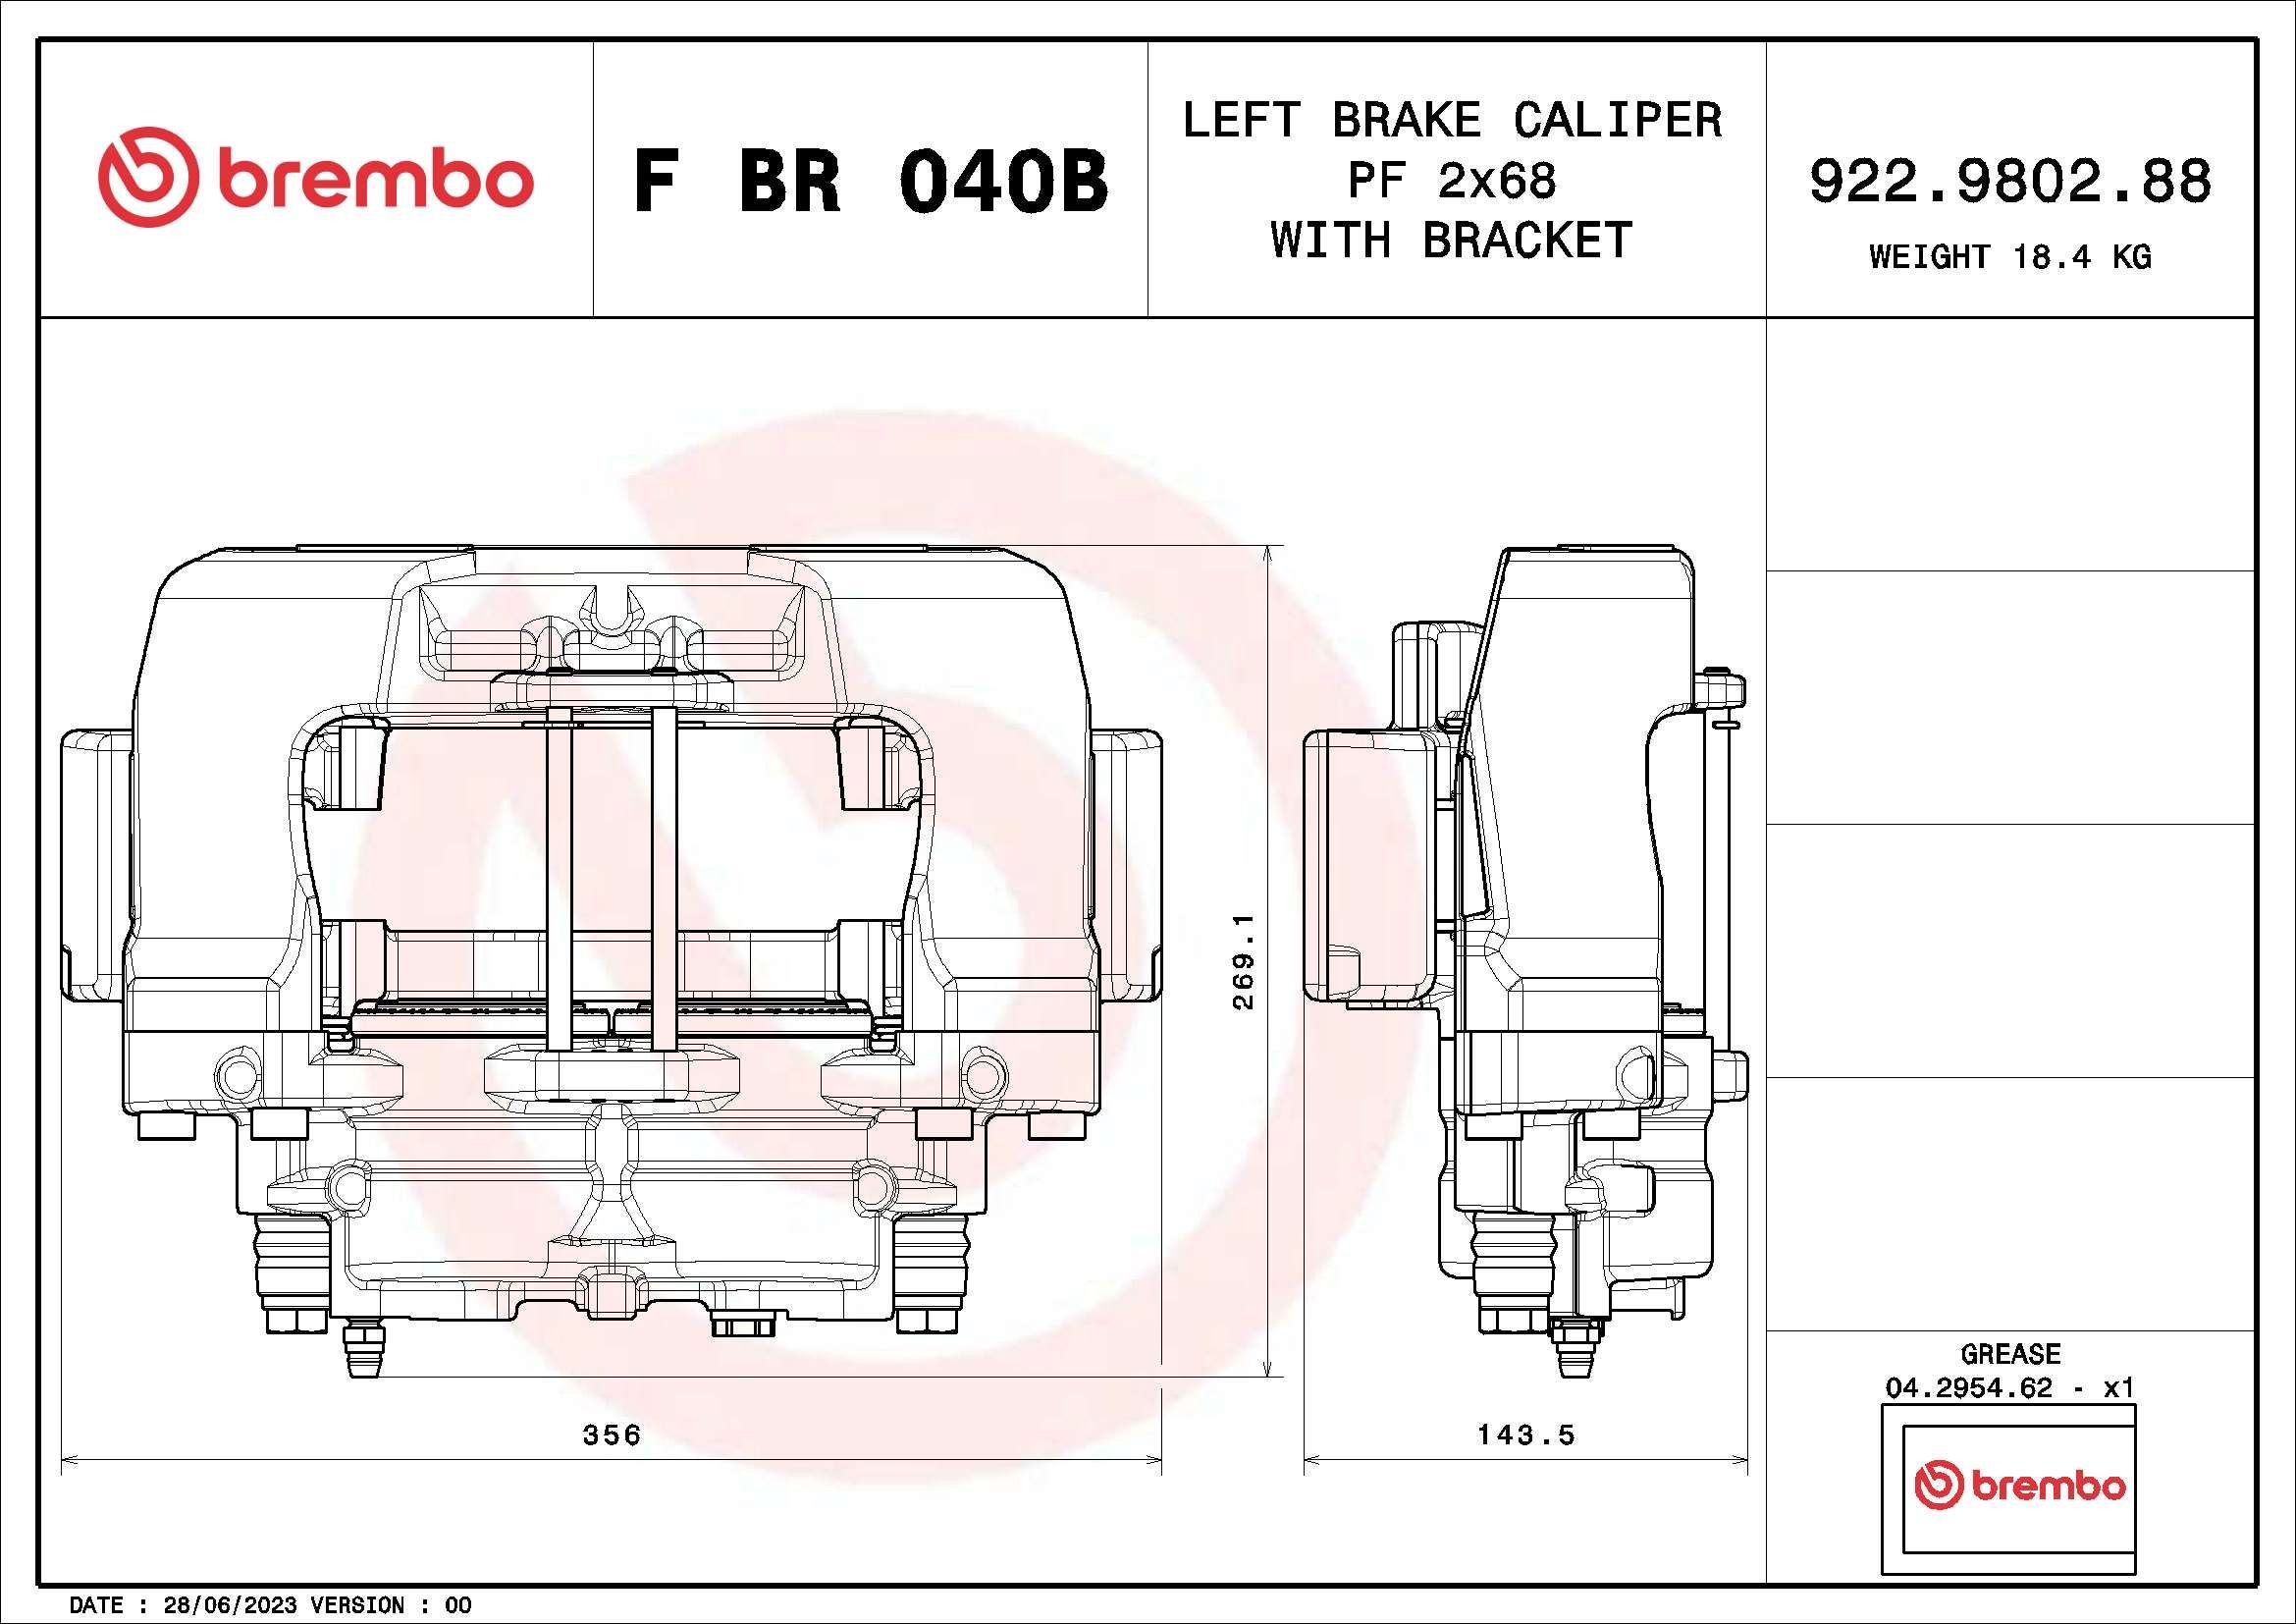 BREMBO Calipers F BR 040B